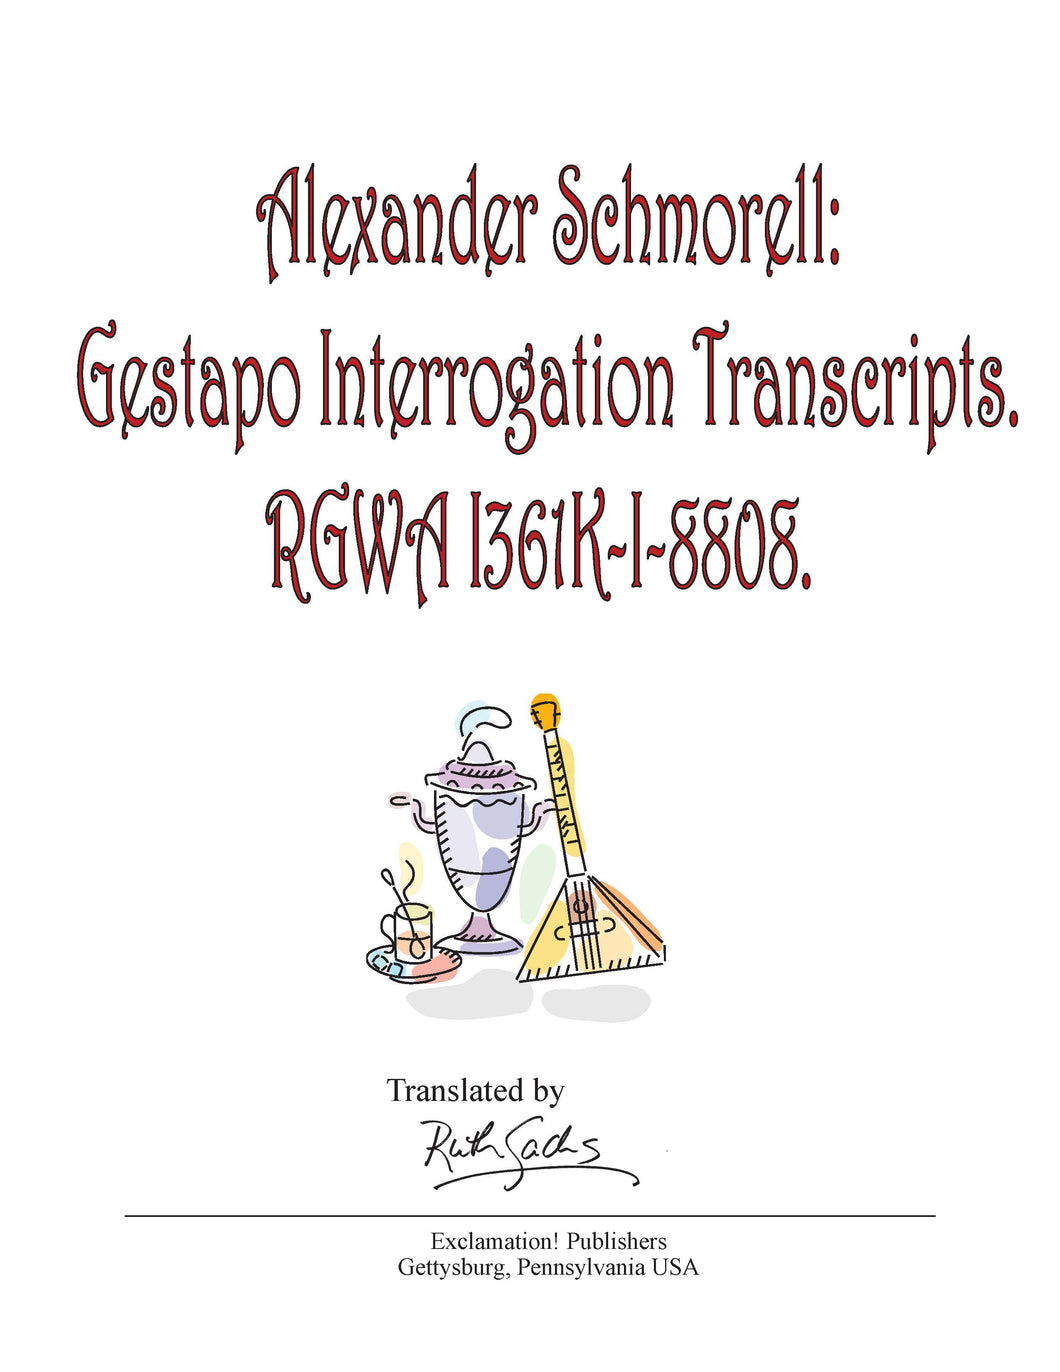 Gestapo Interrogation Transcripts: Alexander Schmorell. RGWA I361K-I-8808.